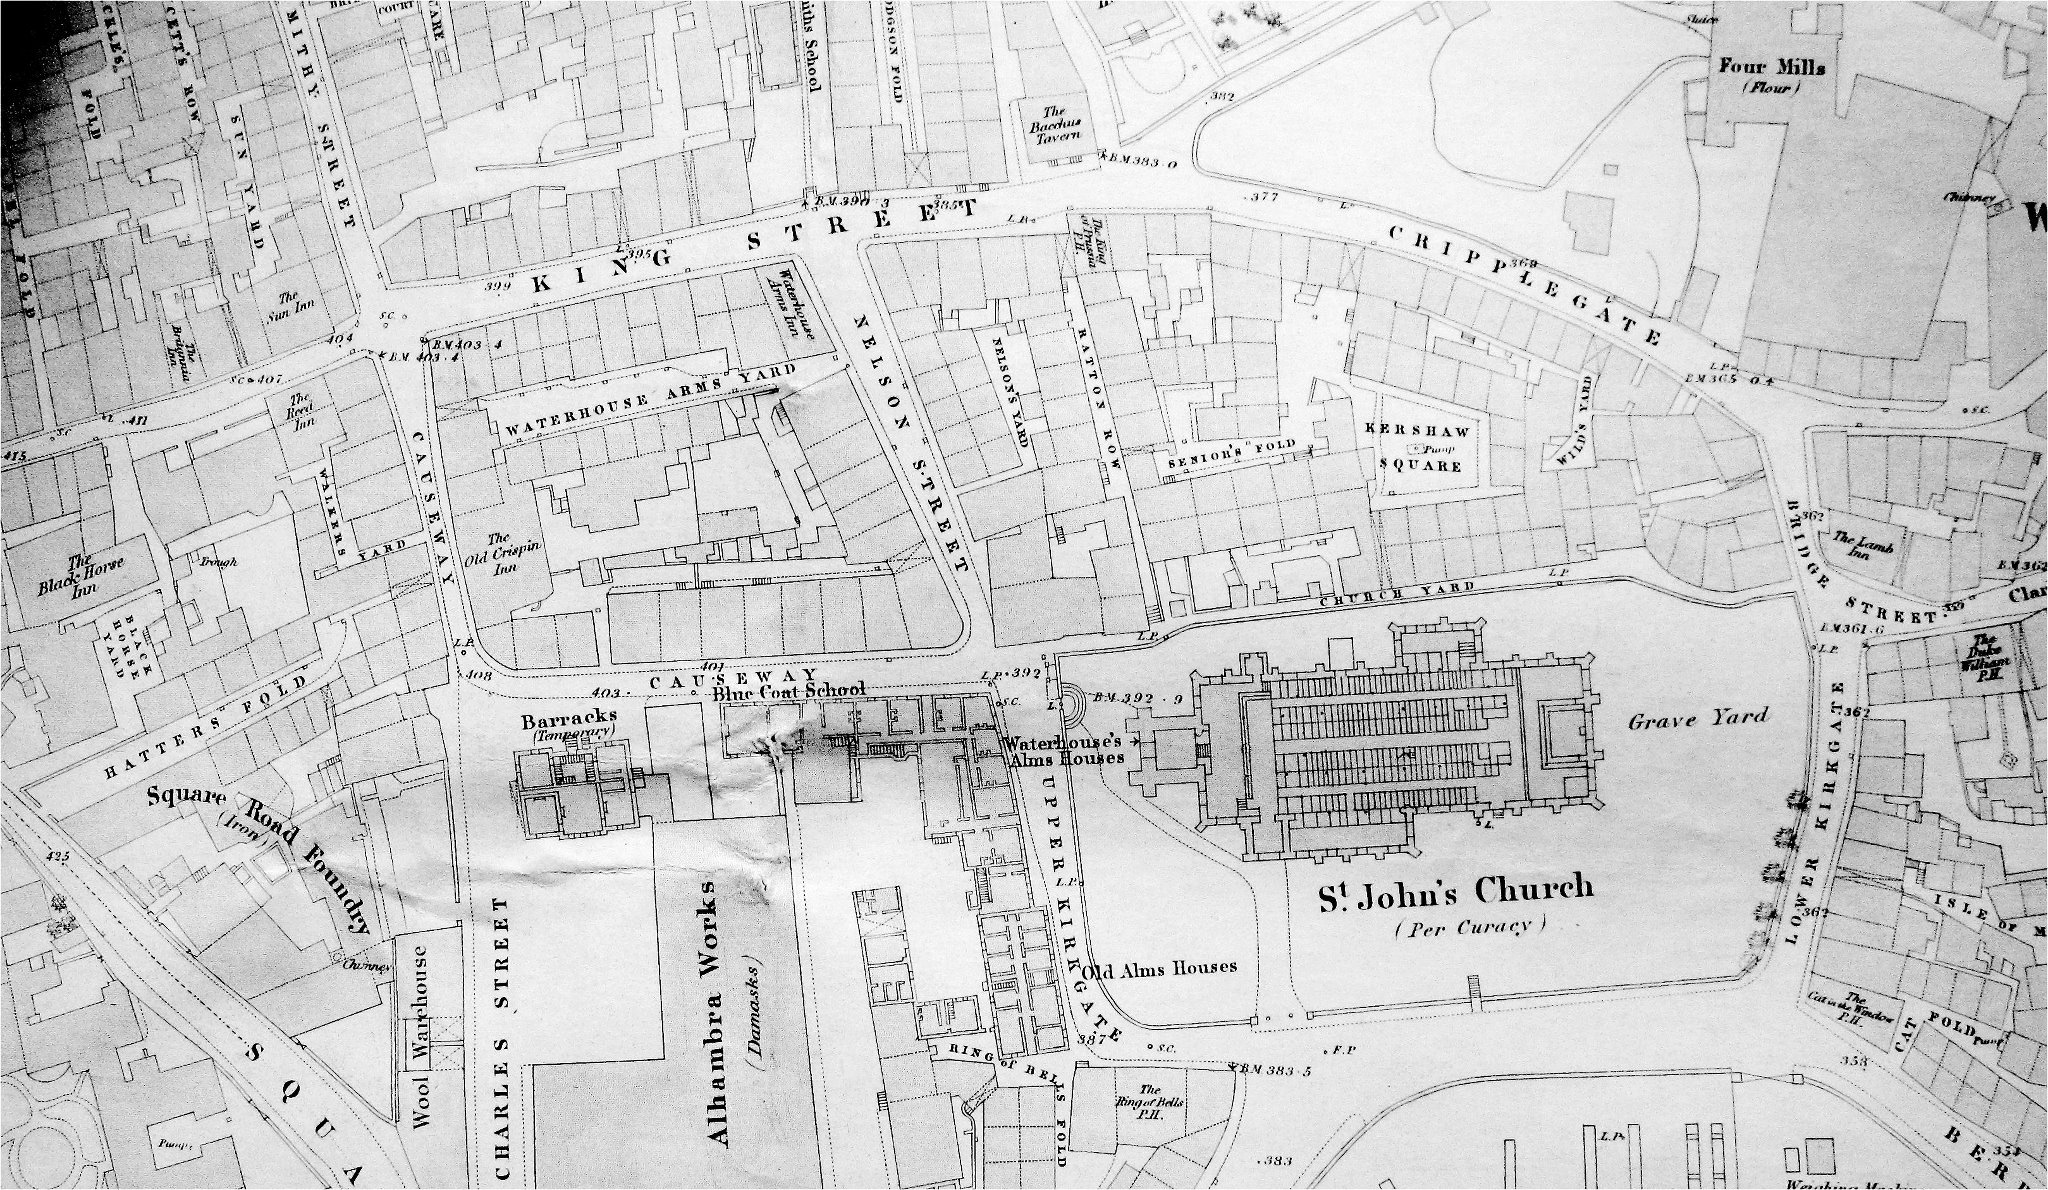 Cripplegate area 1890 Halifax old map repro 231-5-24 